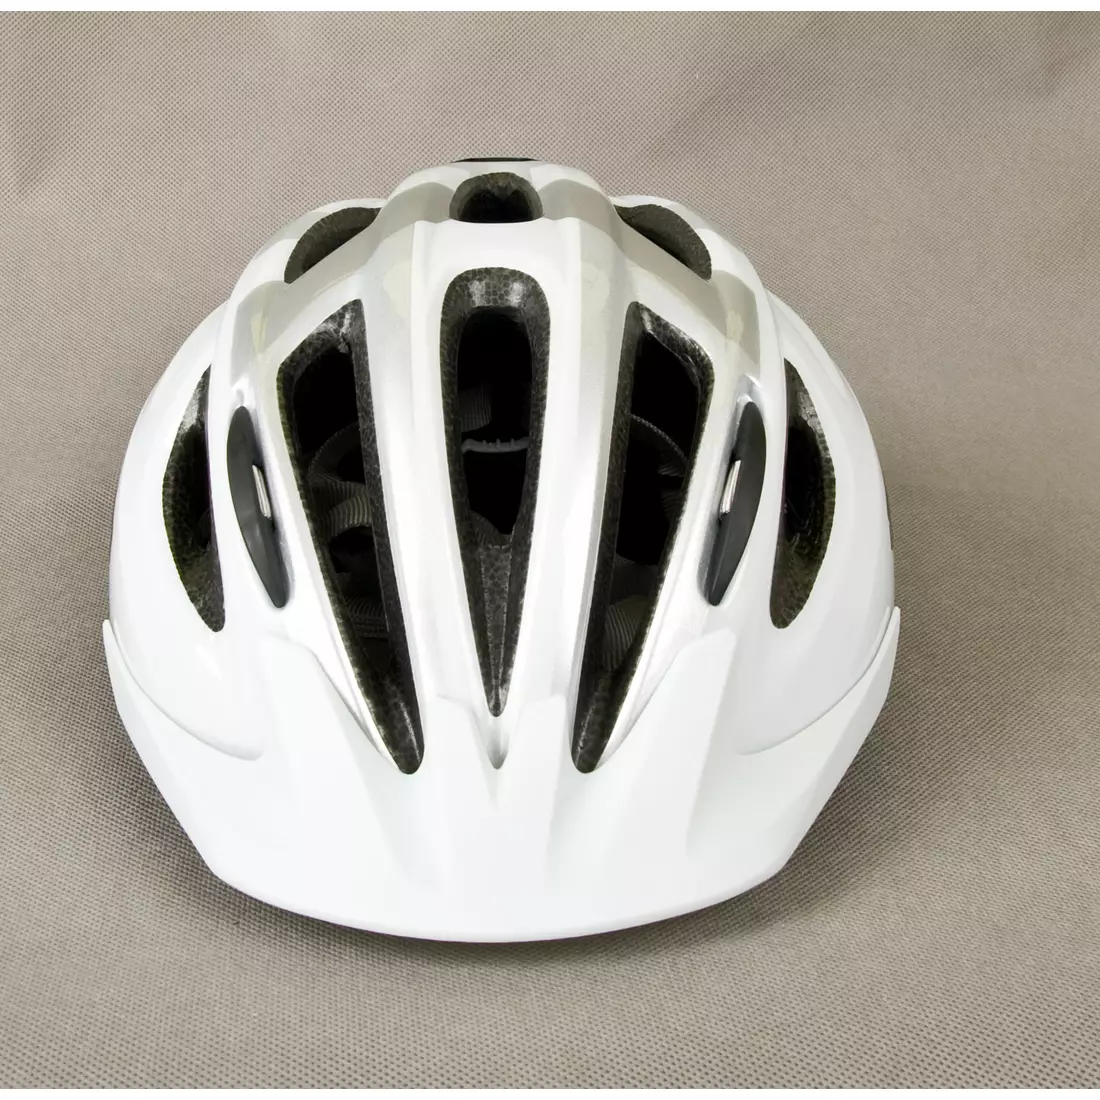 GIRO SKYLINE II bicycle helmet white silver